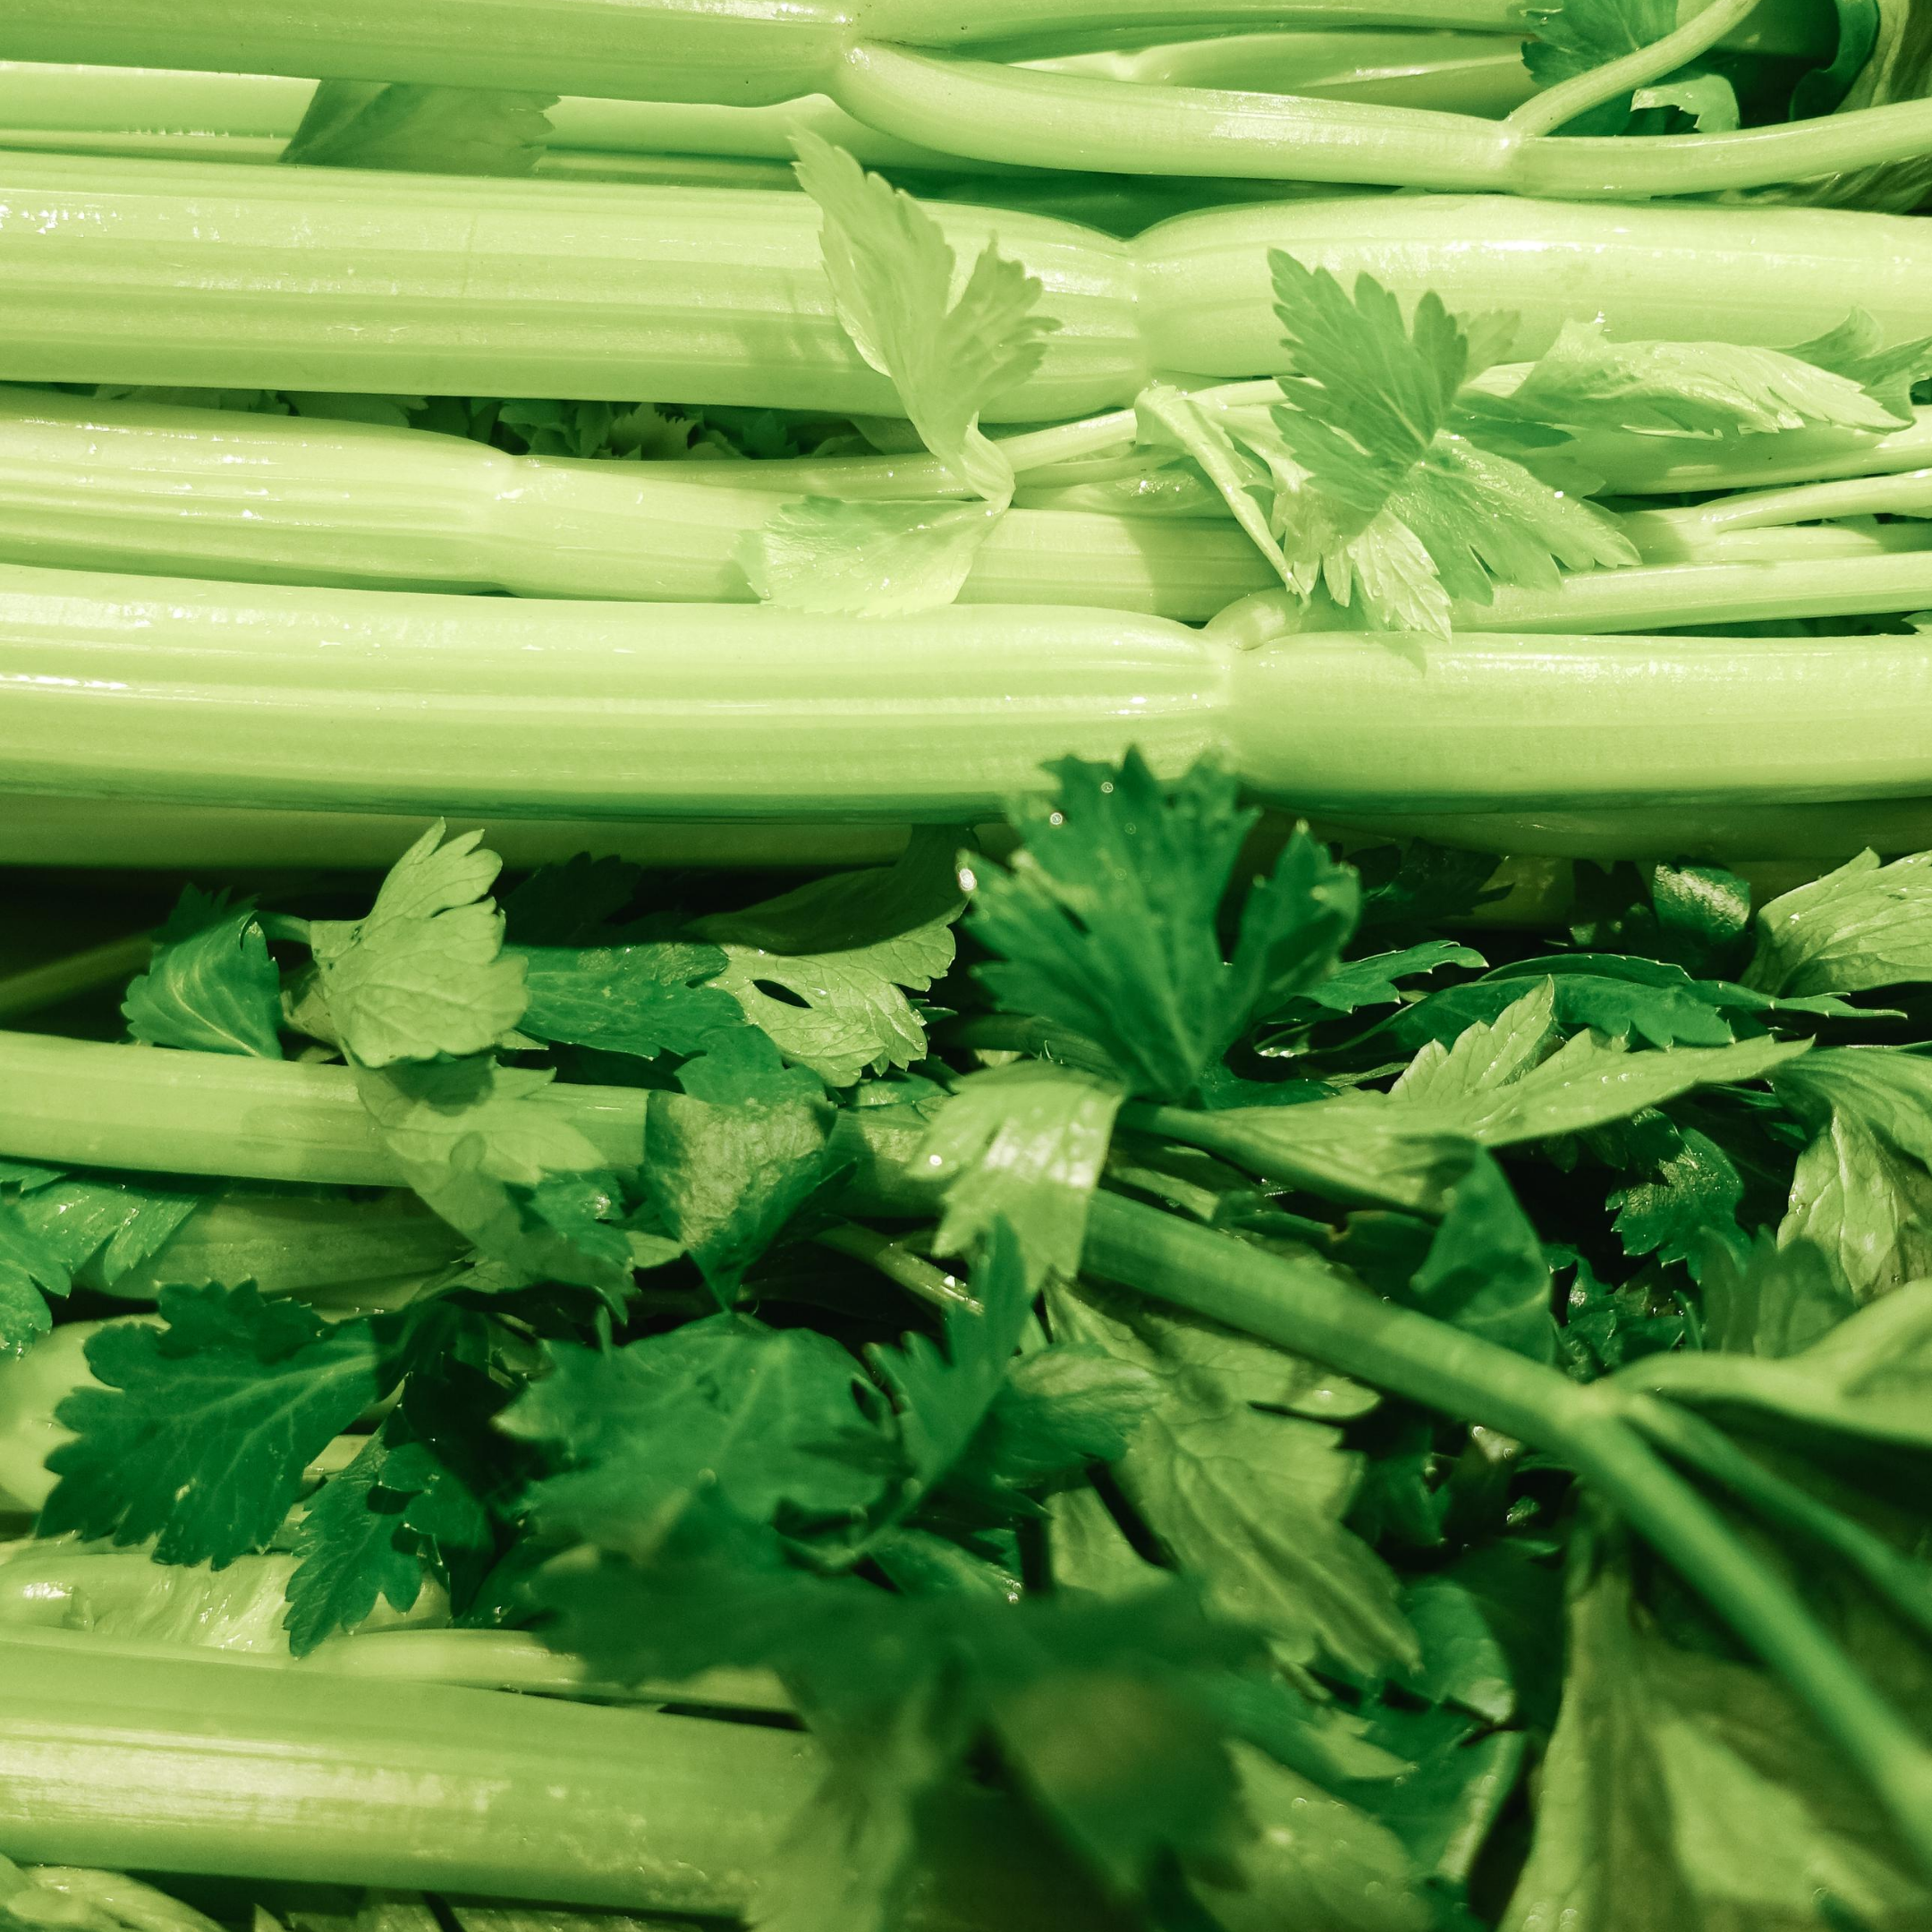 *9. Celery BOX - Certified Organic Celery Box